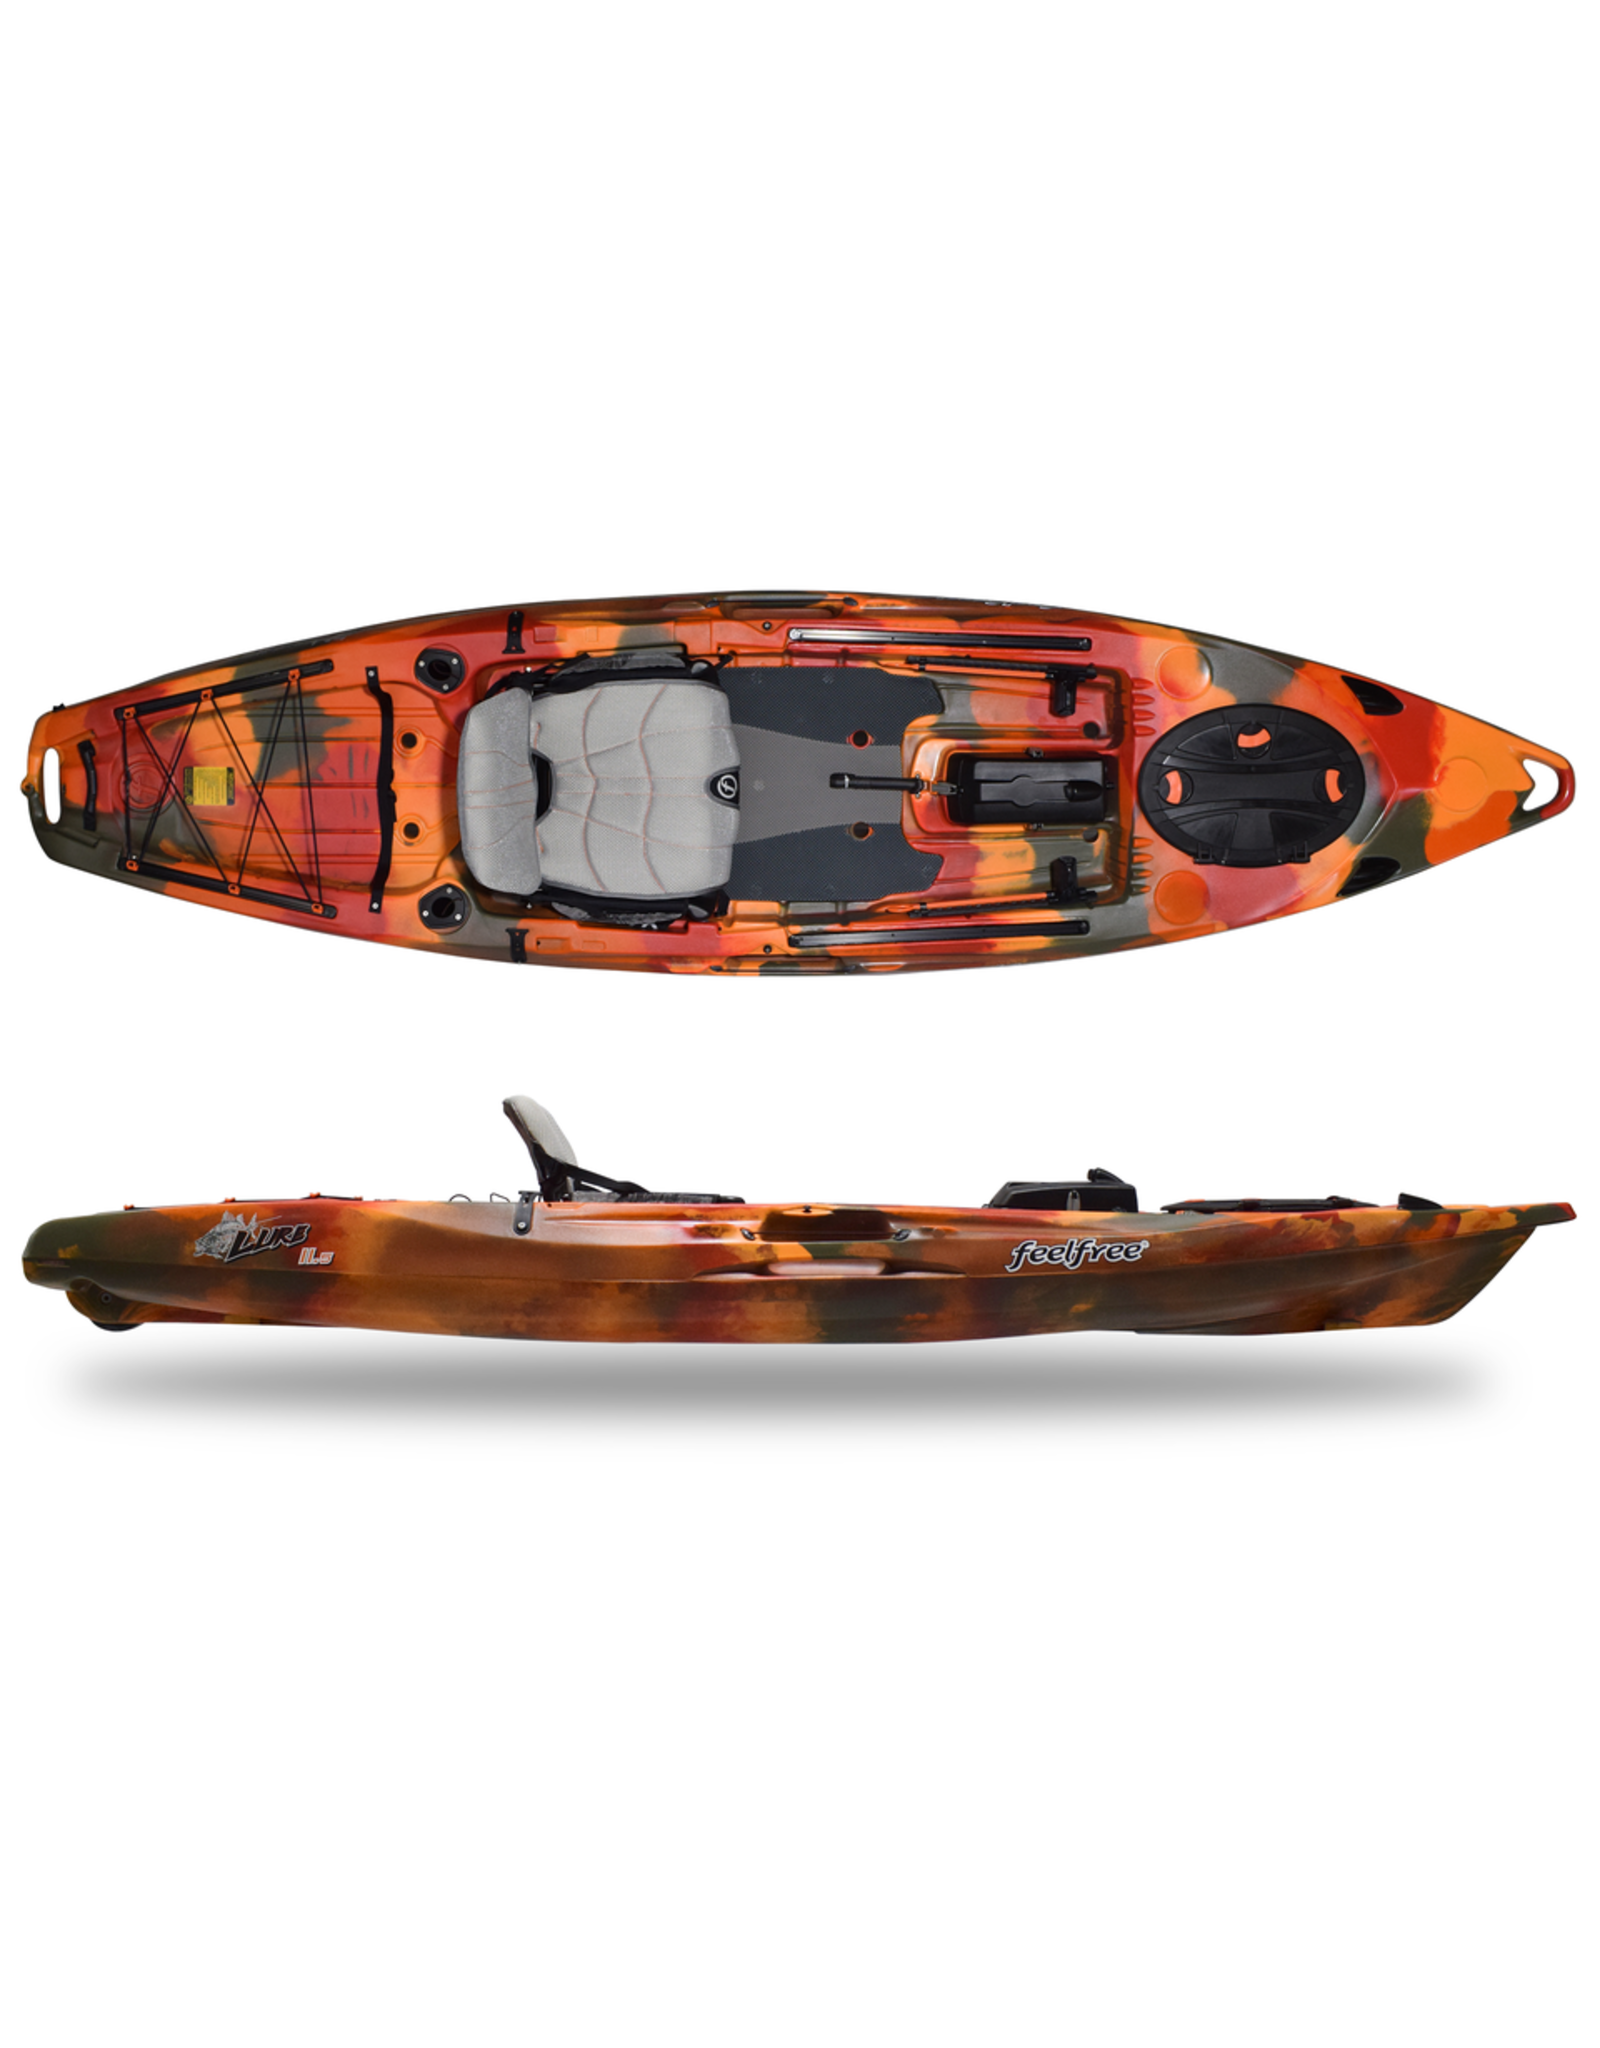 Feelfree Kayaks Feelfree kayak Lure 11.5 V2